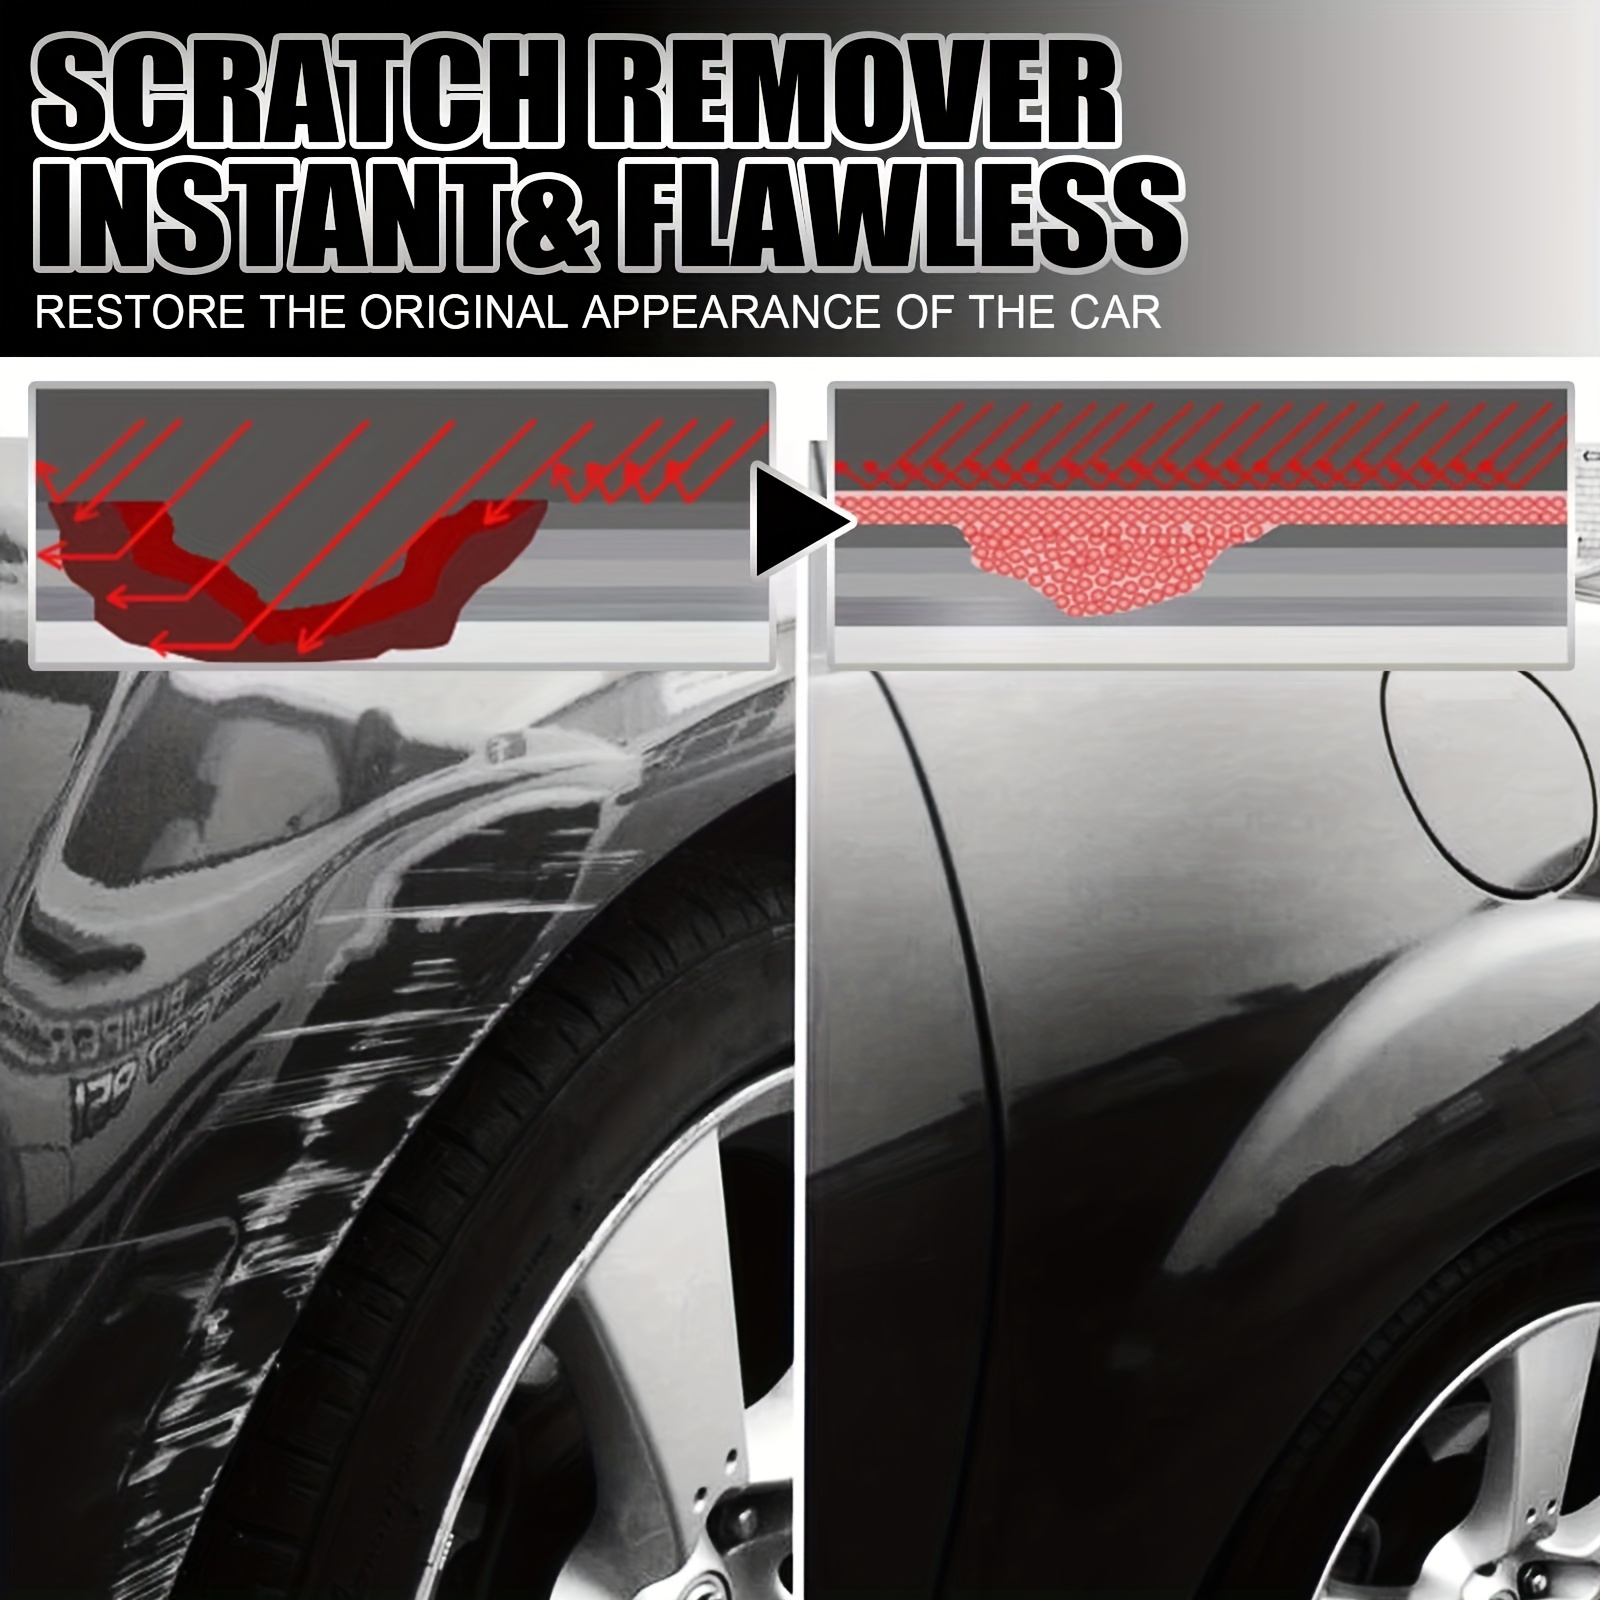 Car Scratch Repair Wax, Paint Surface Repair Scratch Solid Wax Polishing  Refurbishment Maintenance